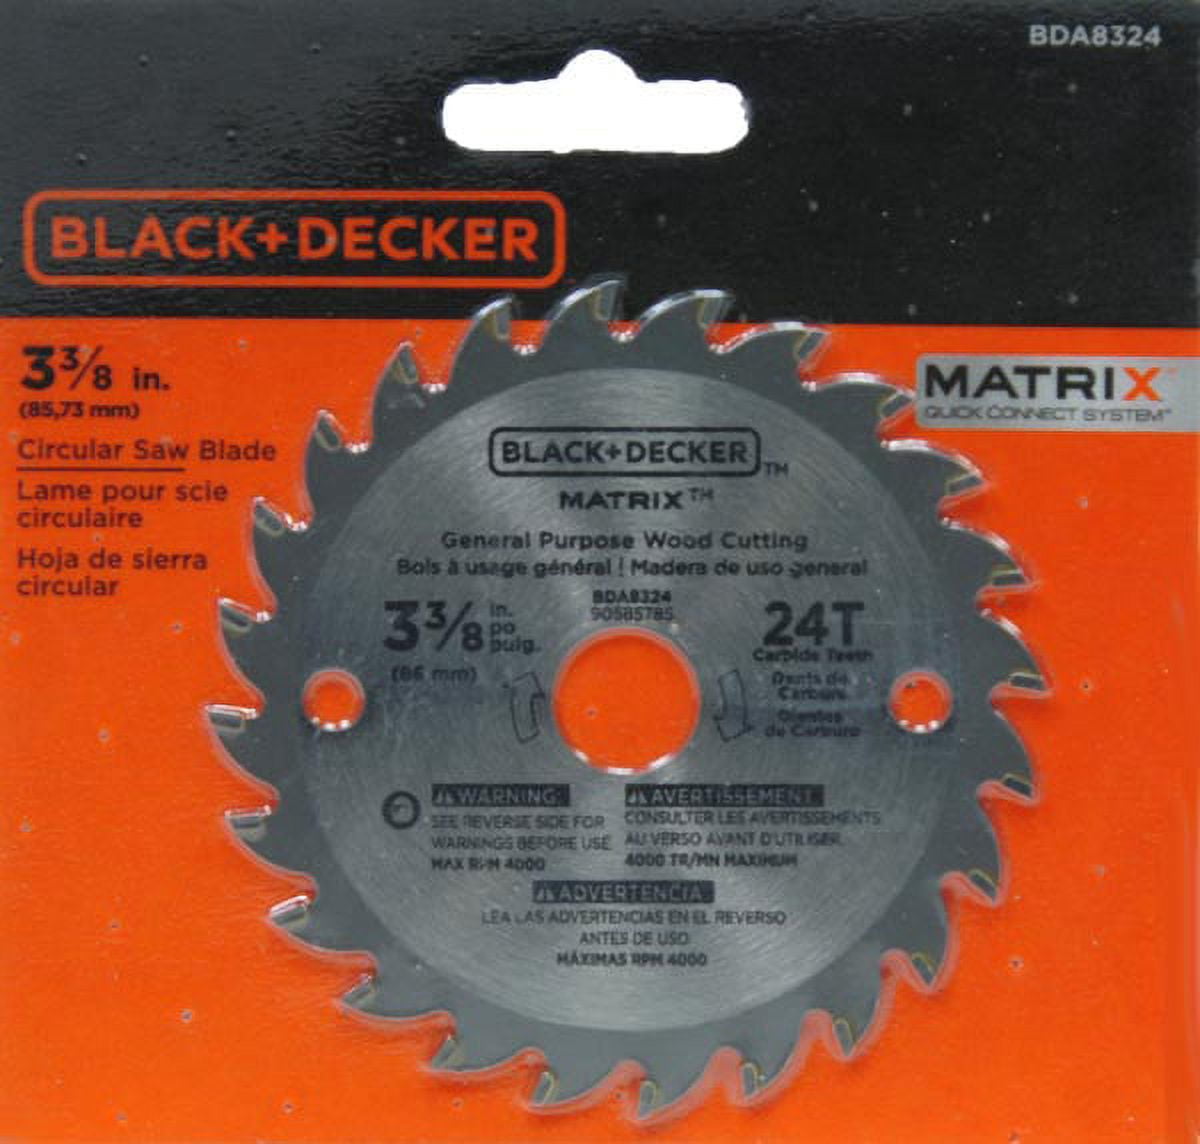 MATRIX™ Trim Saw Attachment with 3-3/8 In Carbide Blade 24T | BLACK+DECKER